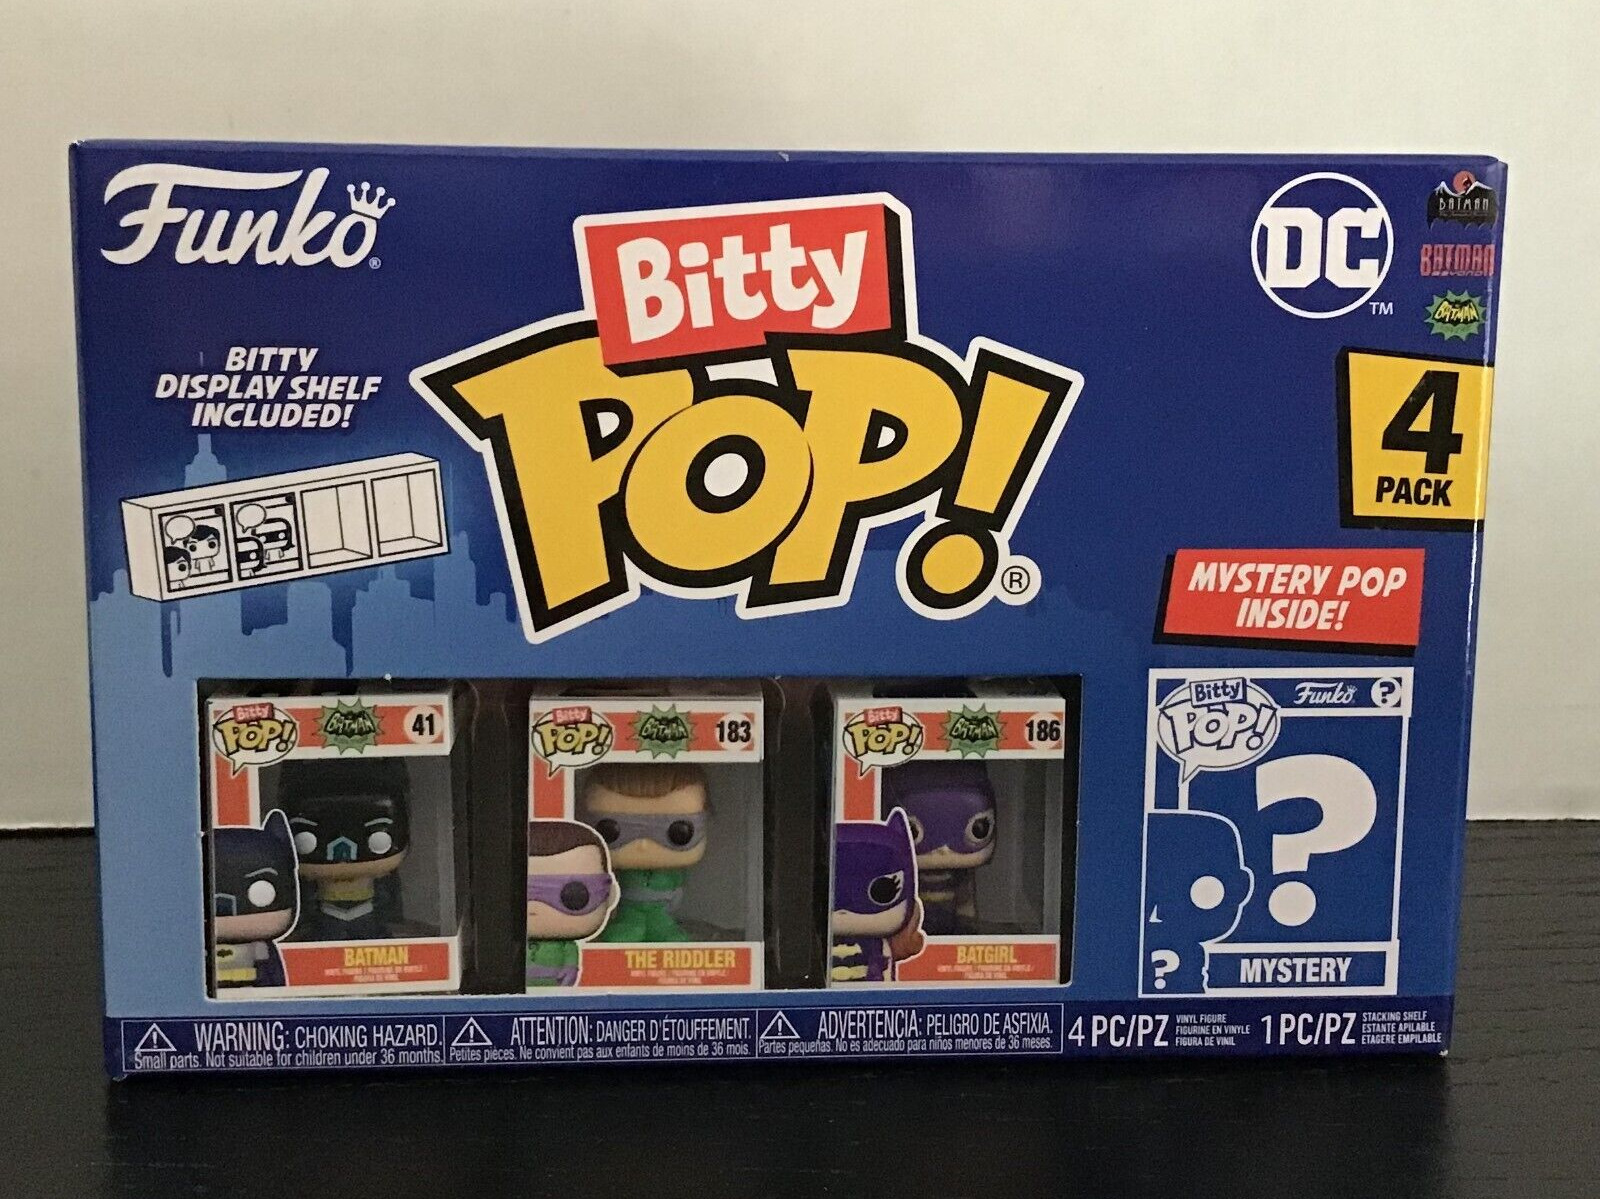 Funko Bitty Pop 1966 Batman Riddler Batgirl Bitty Pop 4 pack w/ Mystery Pop